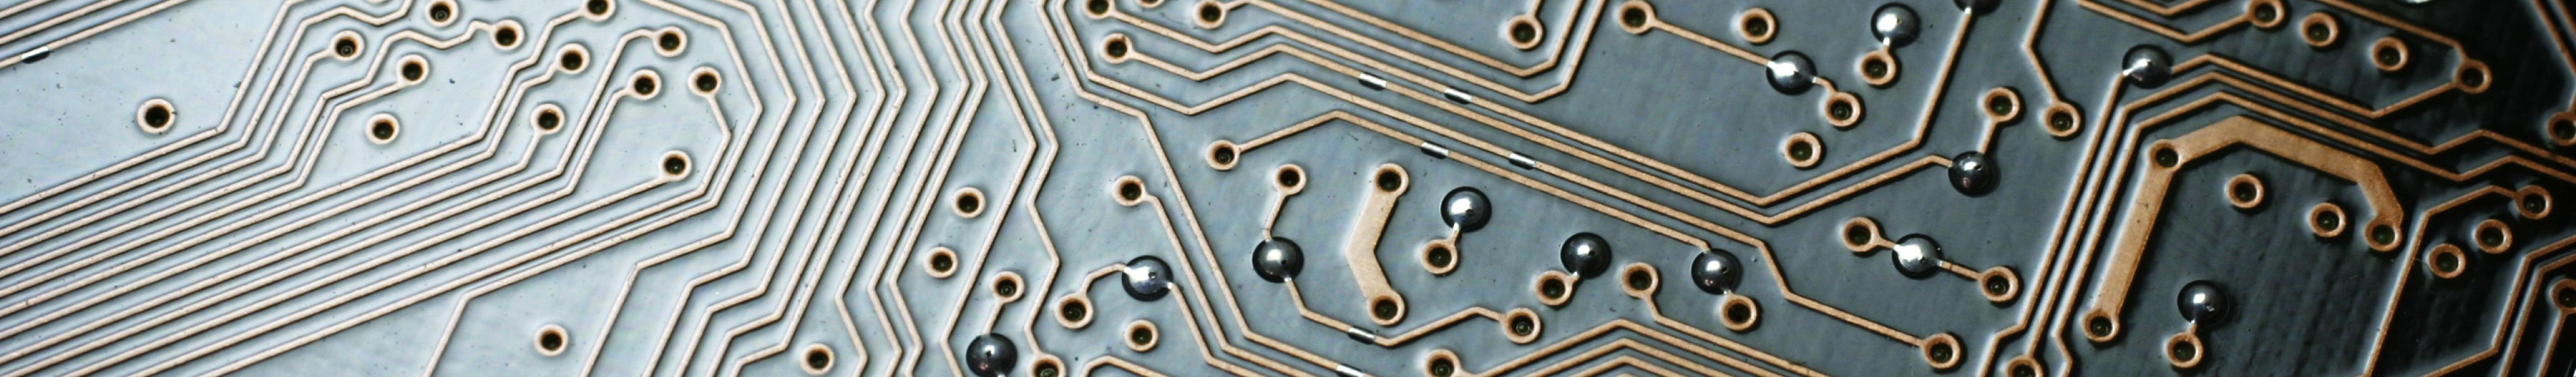 Closeup of a grey and brown computer circuit board.